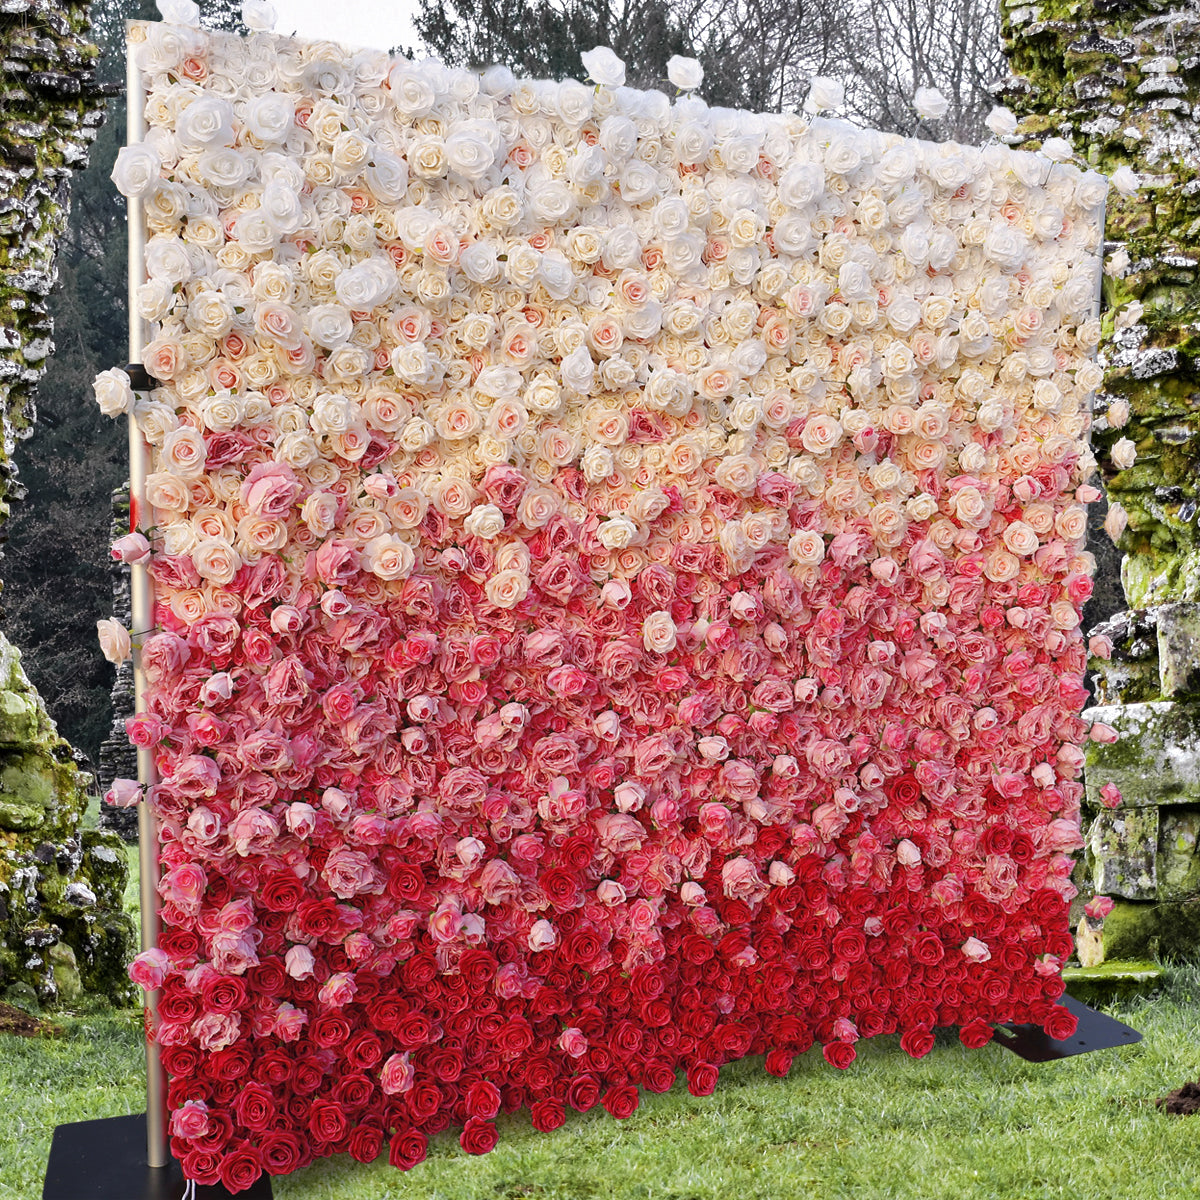 3D Artificial Flower Wall Arrangement Wedding Party Birthday Backdrop Decor HQ9001